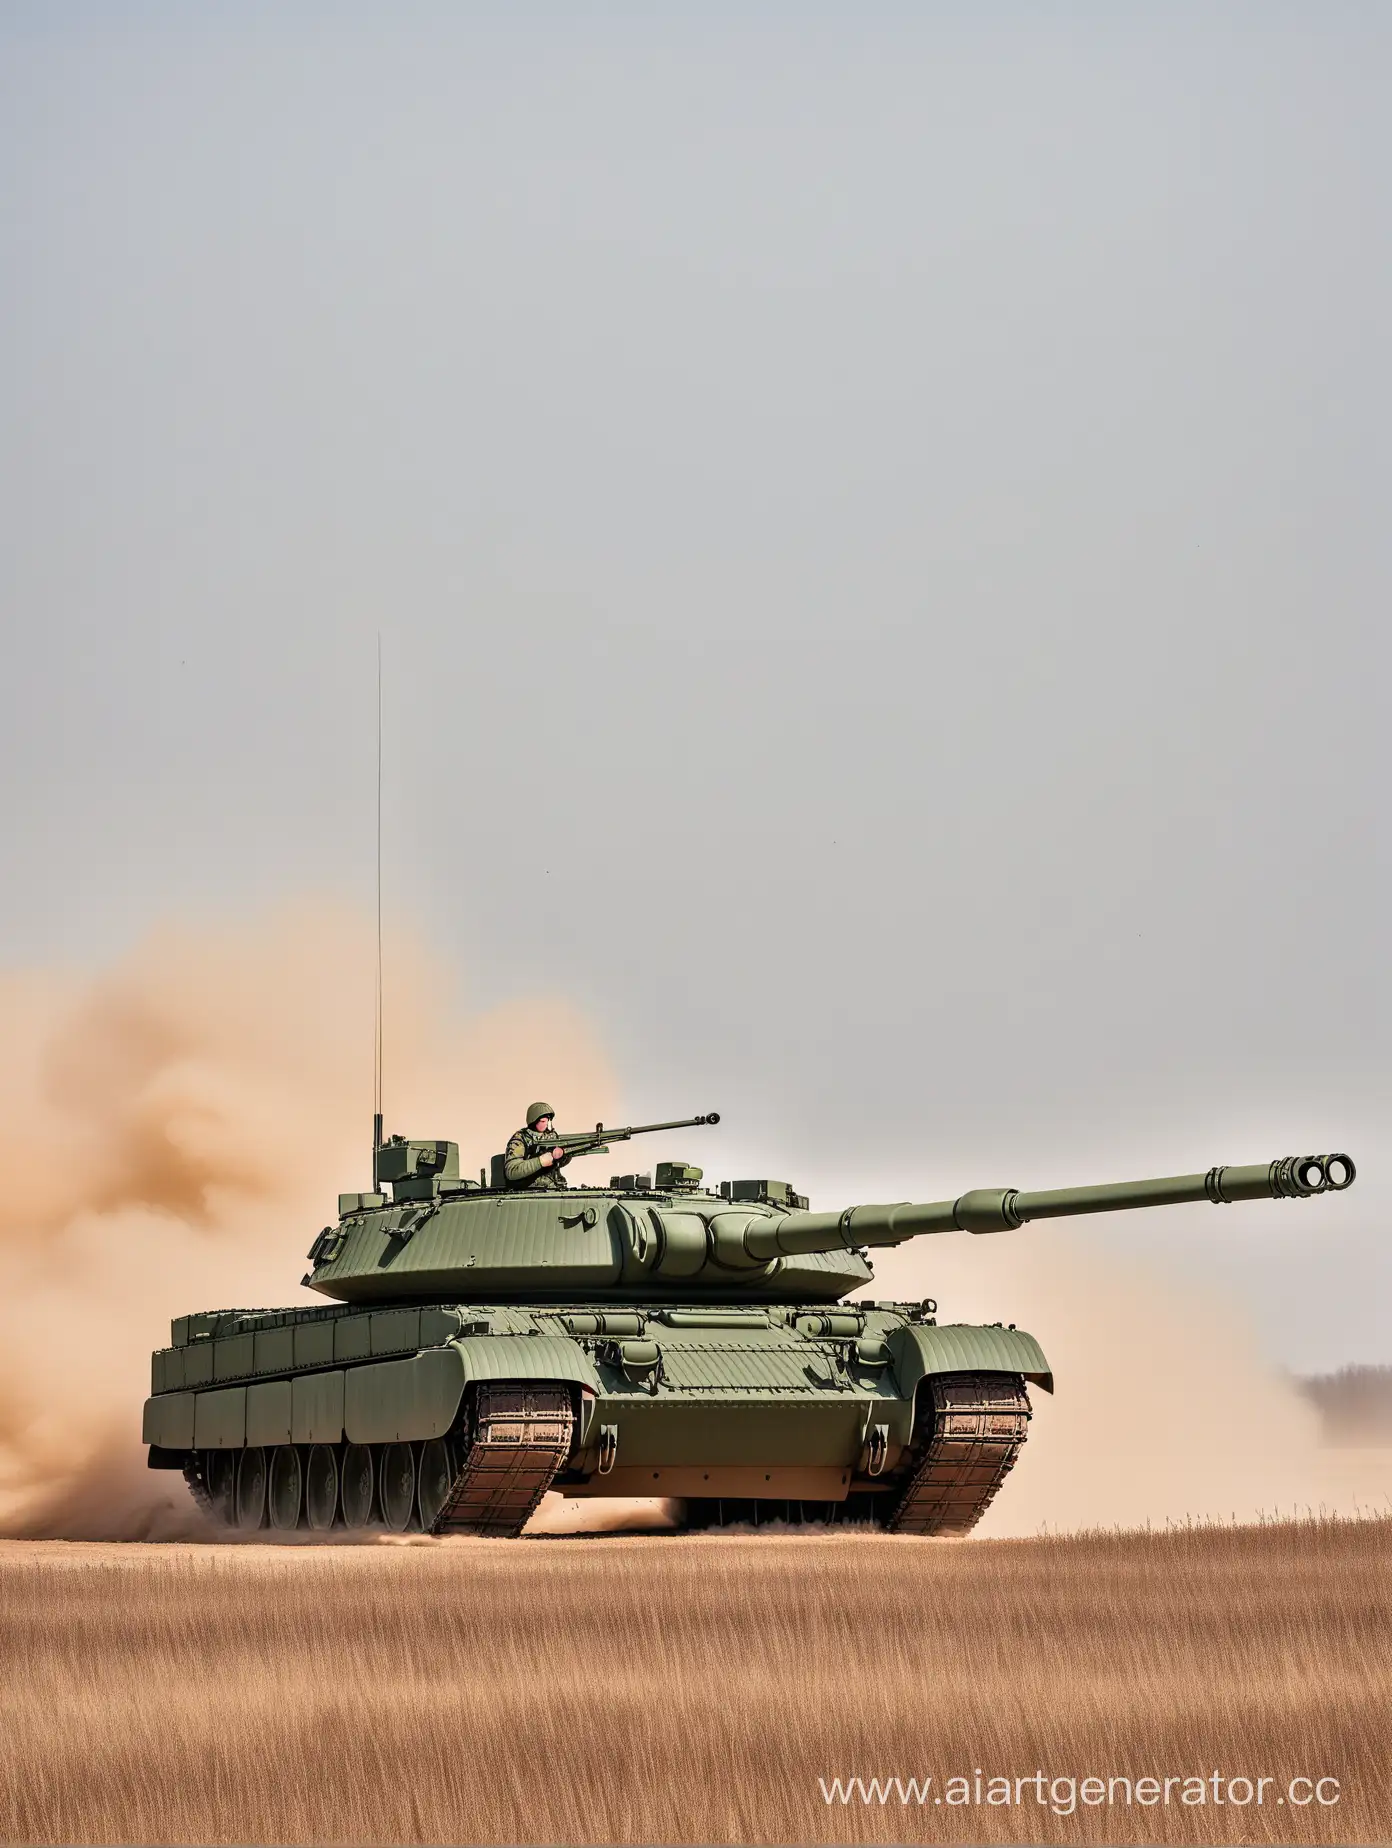 Powerful-Russian-Military-Tank-on-a-Snowy-Battlefield